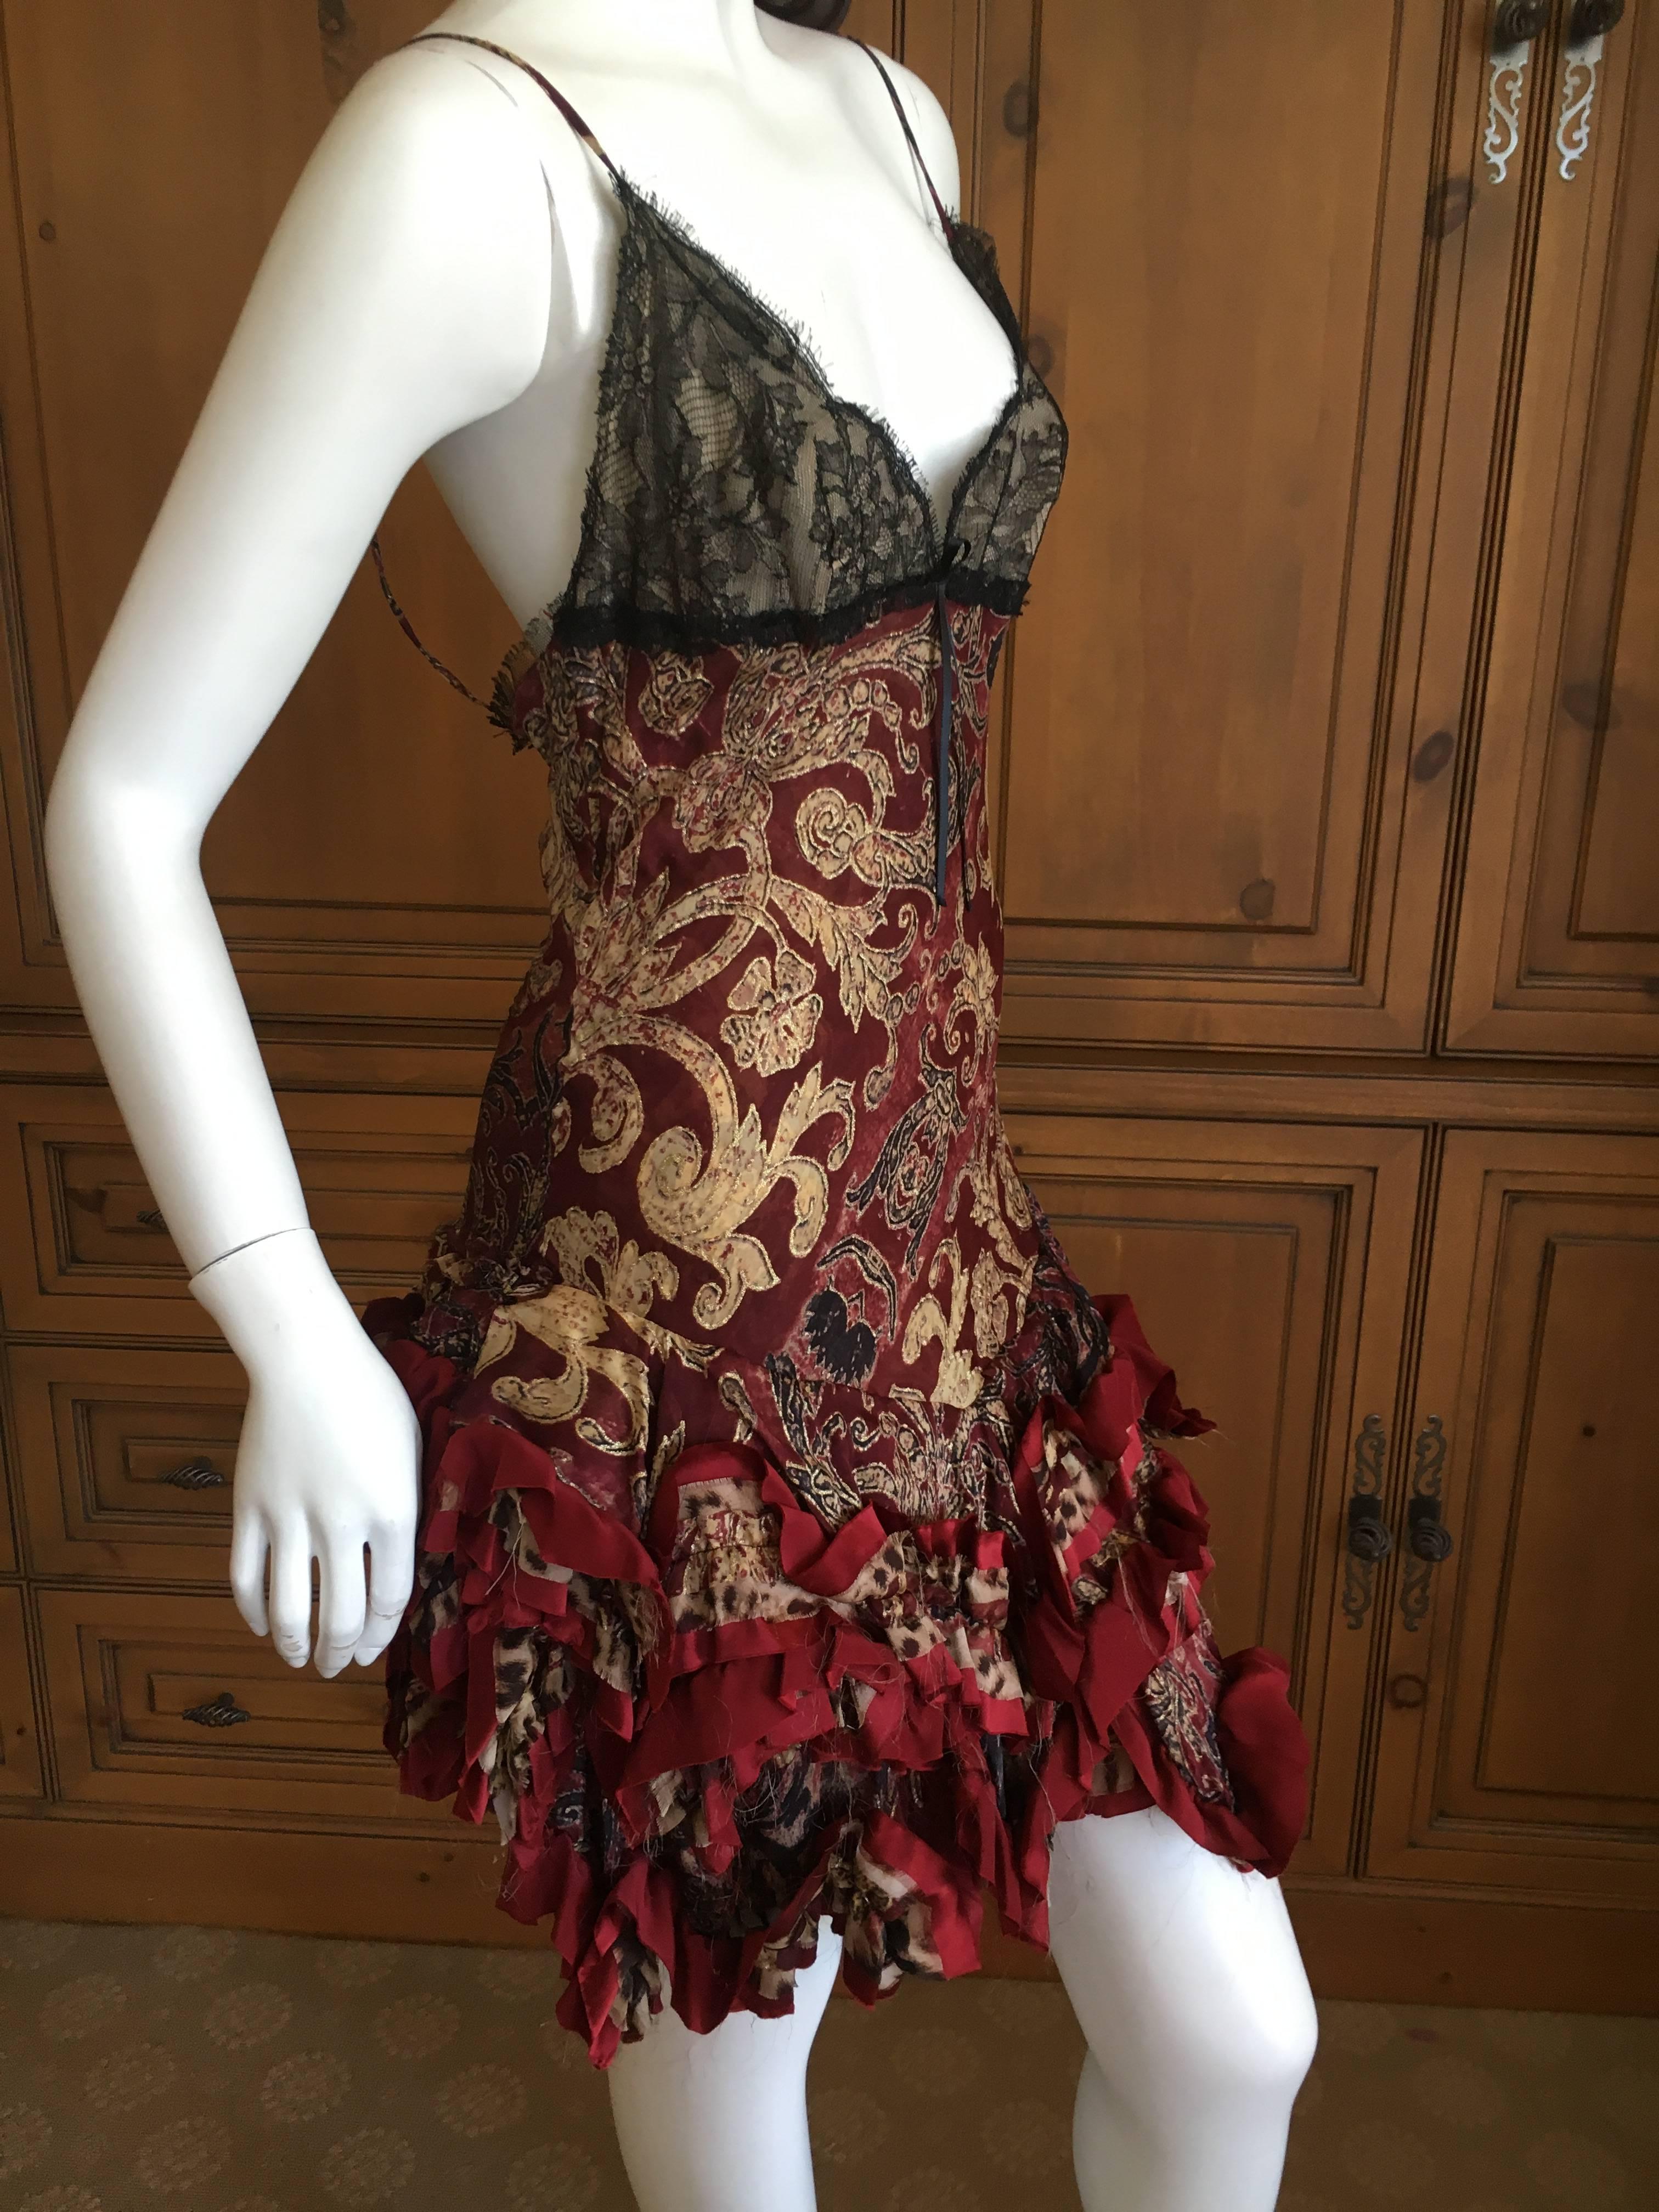 Roberto Cavalli Romantic Ruffle Trim Mini Dress.
Size M
Bust 36